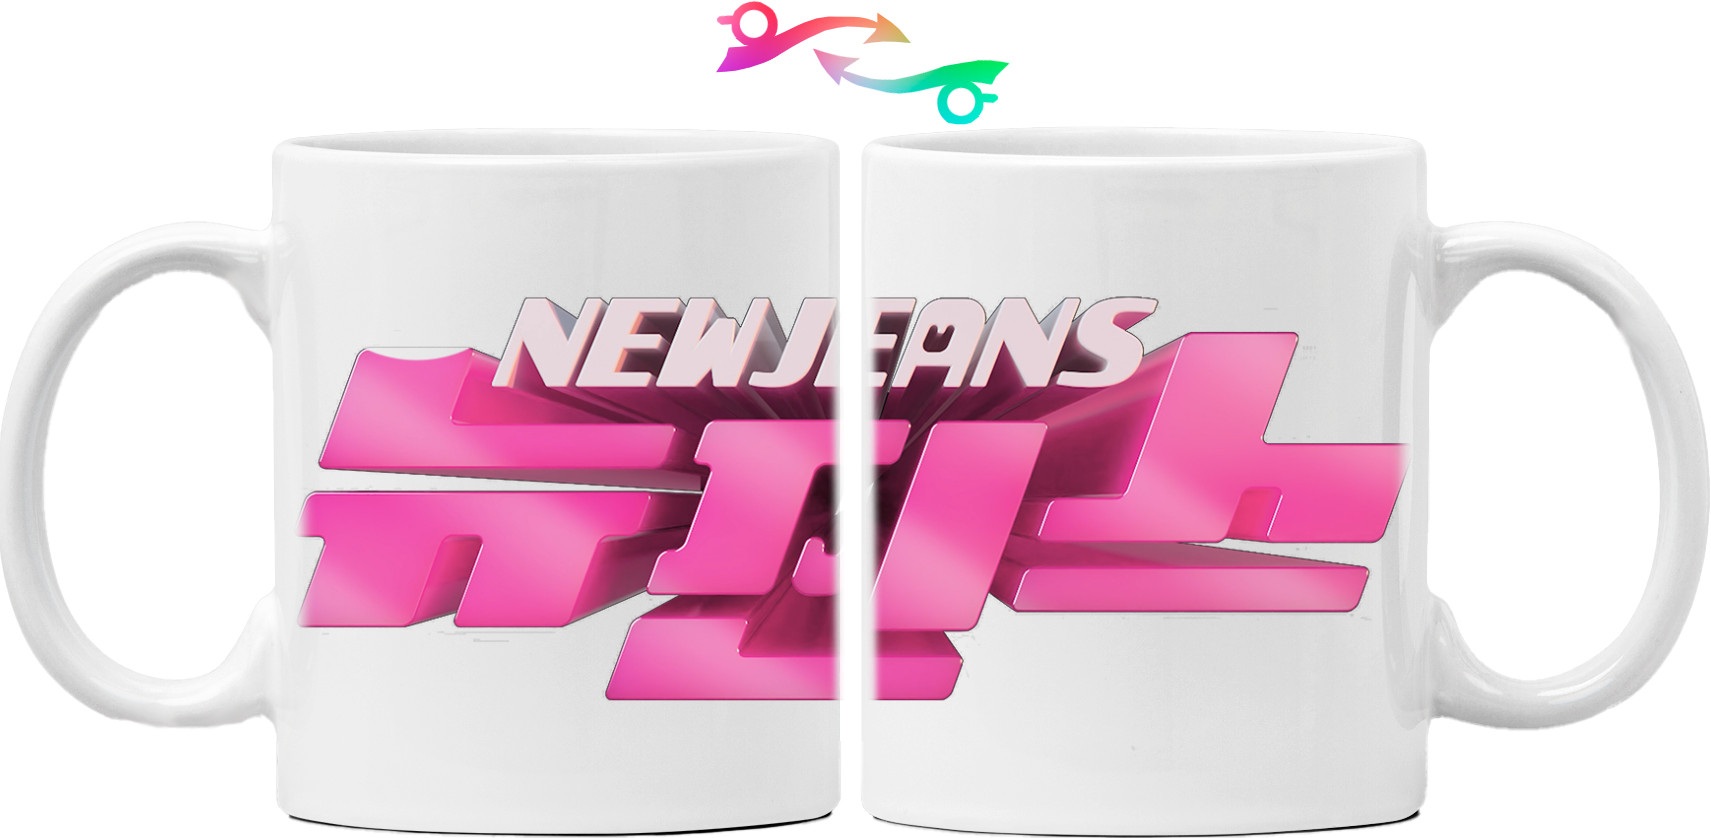 newjeans логотип